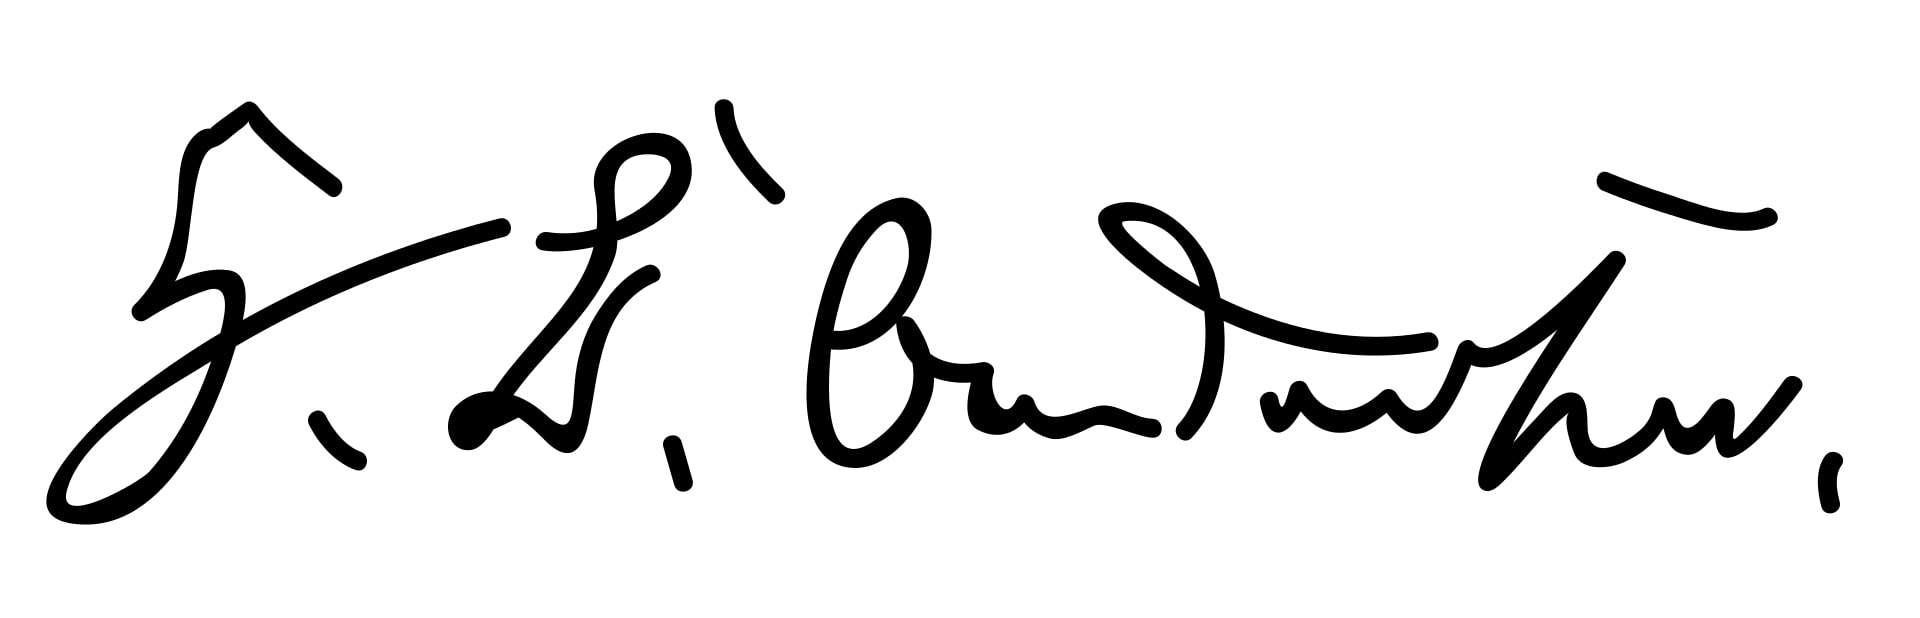 Hans Christian Andersen Signature